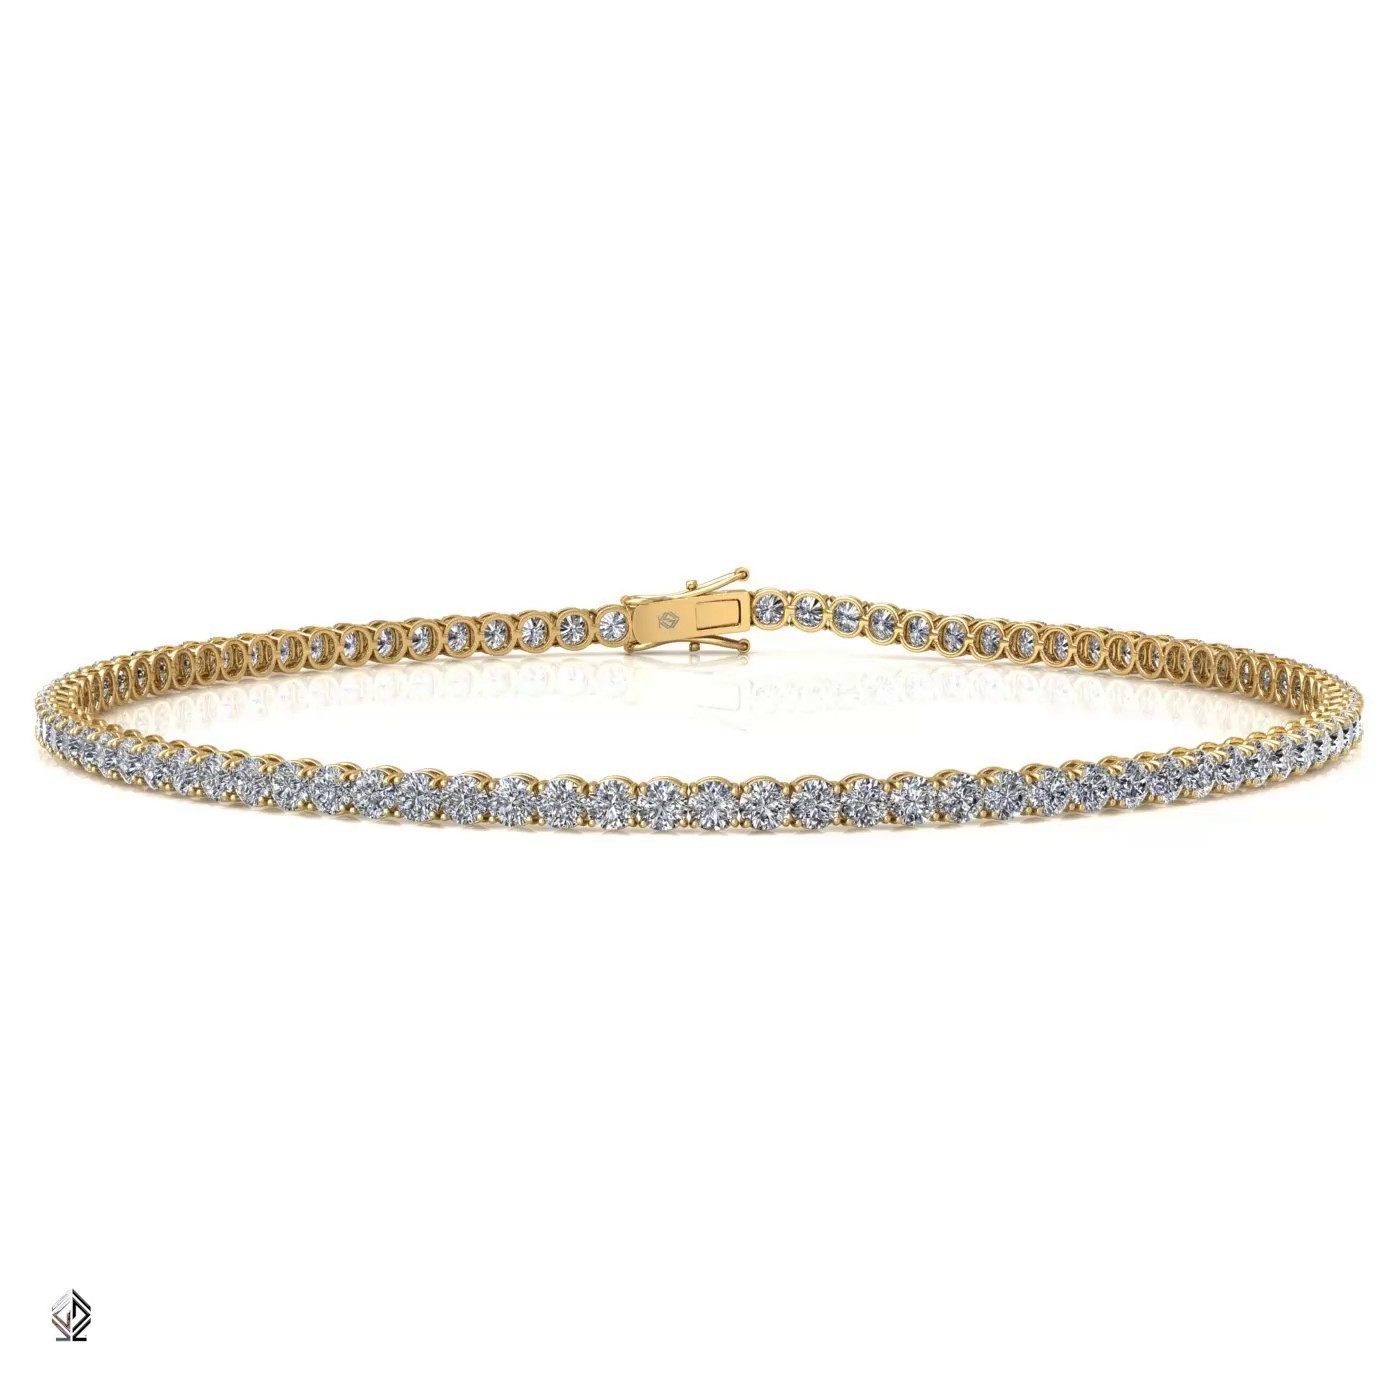 18k white gold 1.8mm 4 prong round shape diamond tennis bracelet in round setting Photos & images